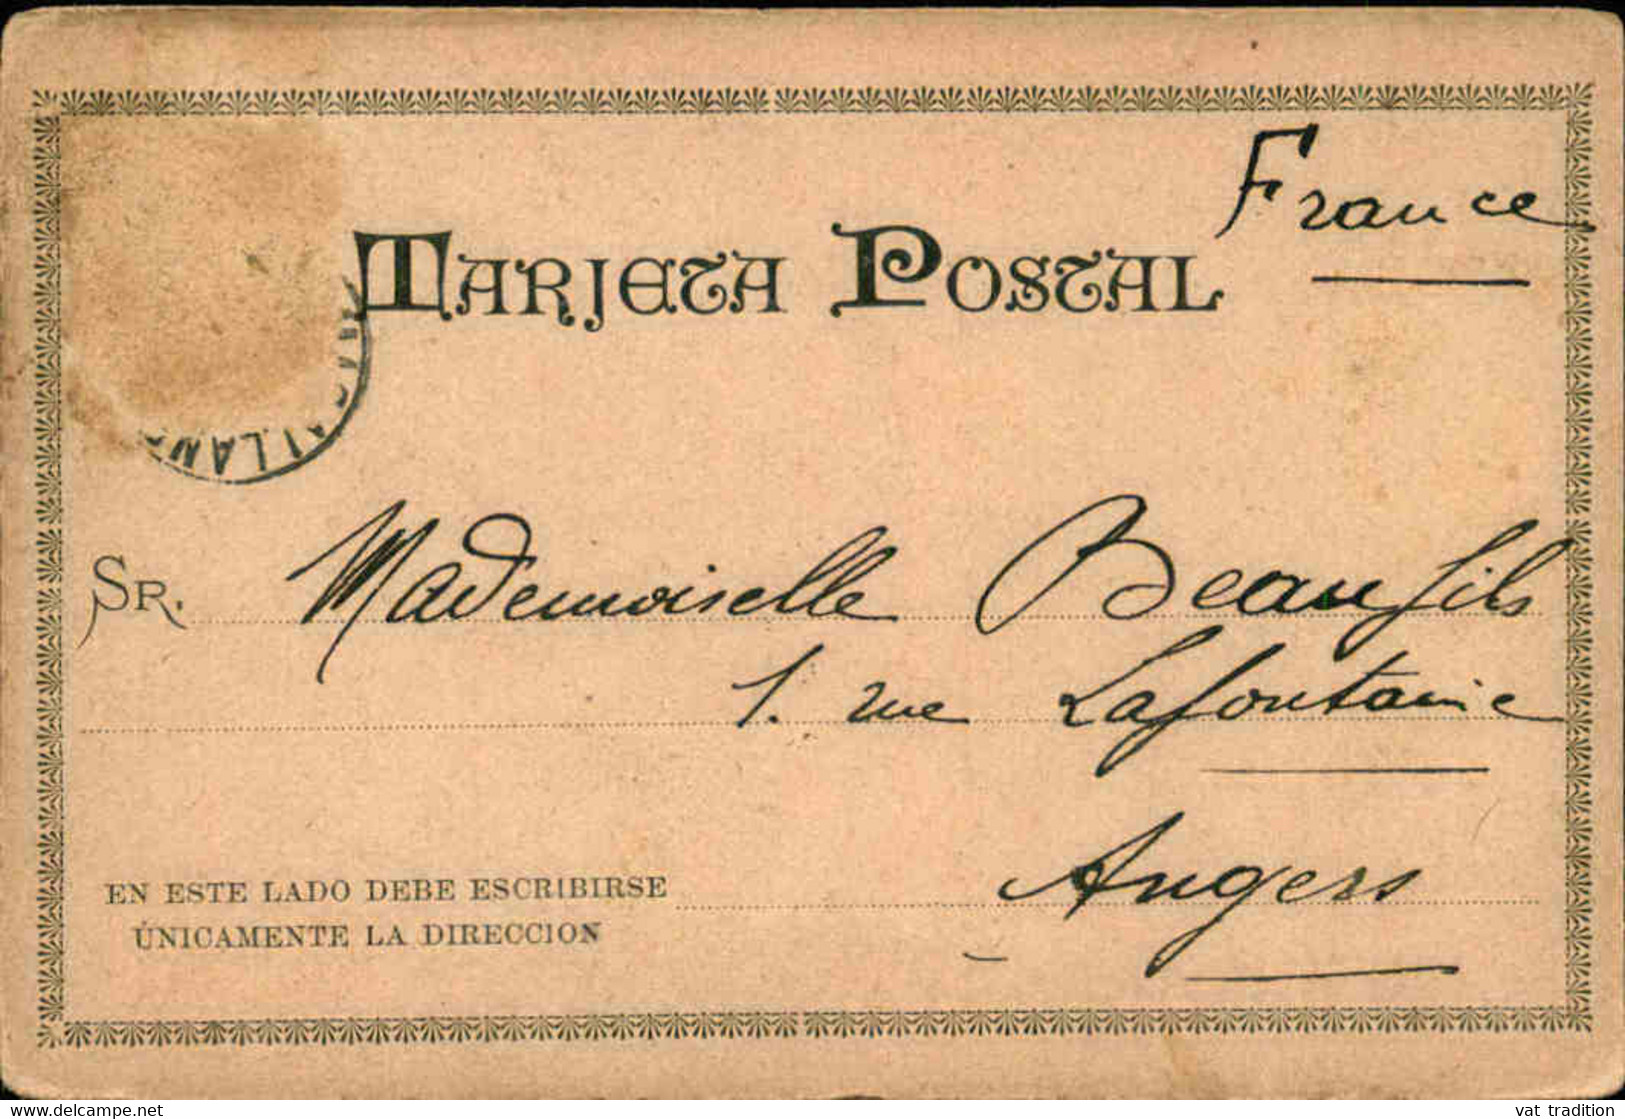 INDIEN - Carte Postale - Indiens Des Magellanes (Chili ) - L 129522 - America